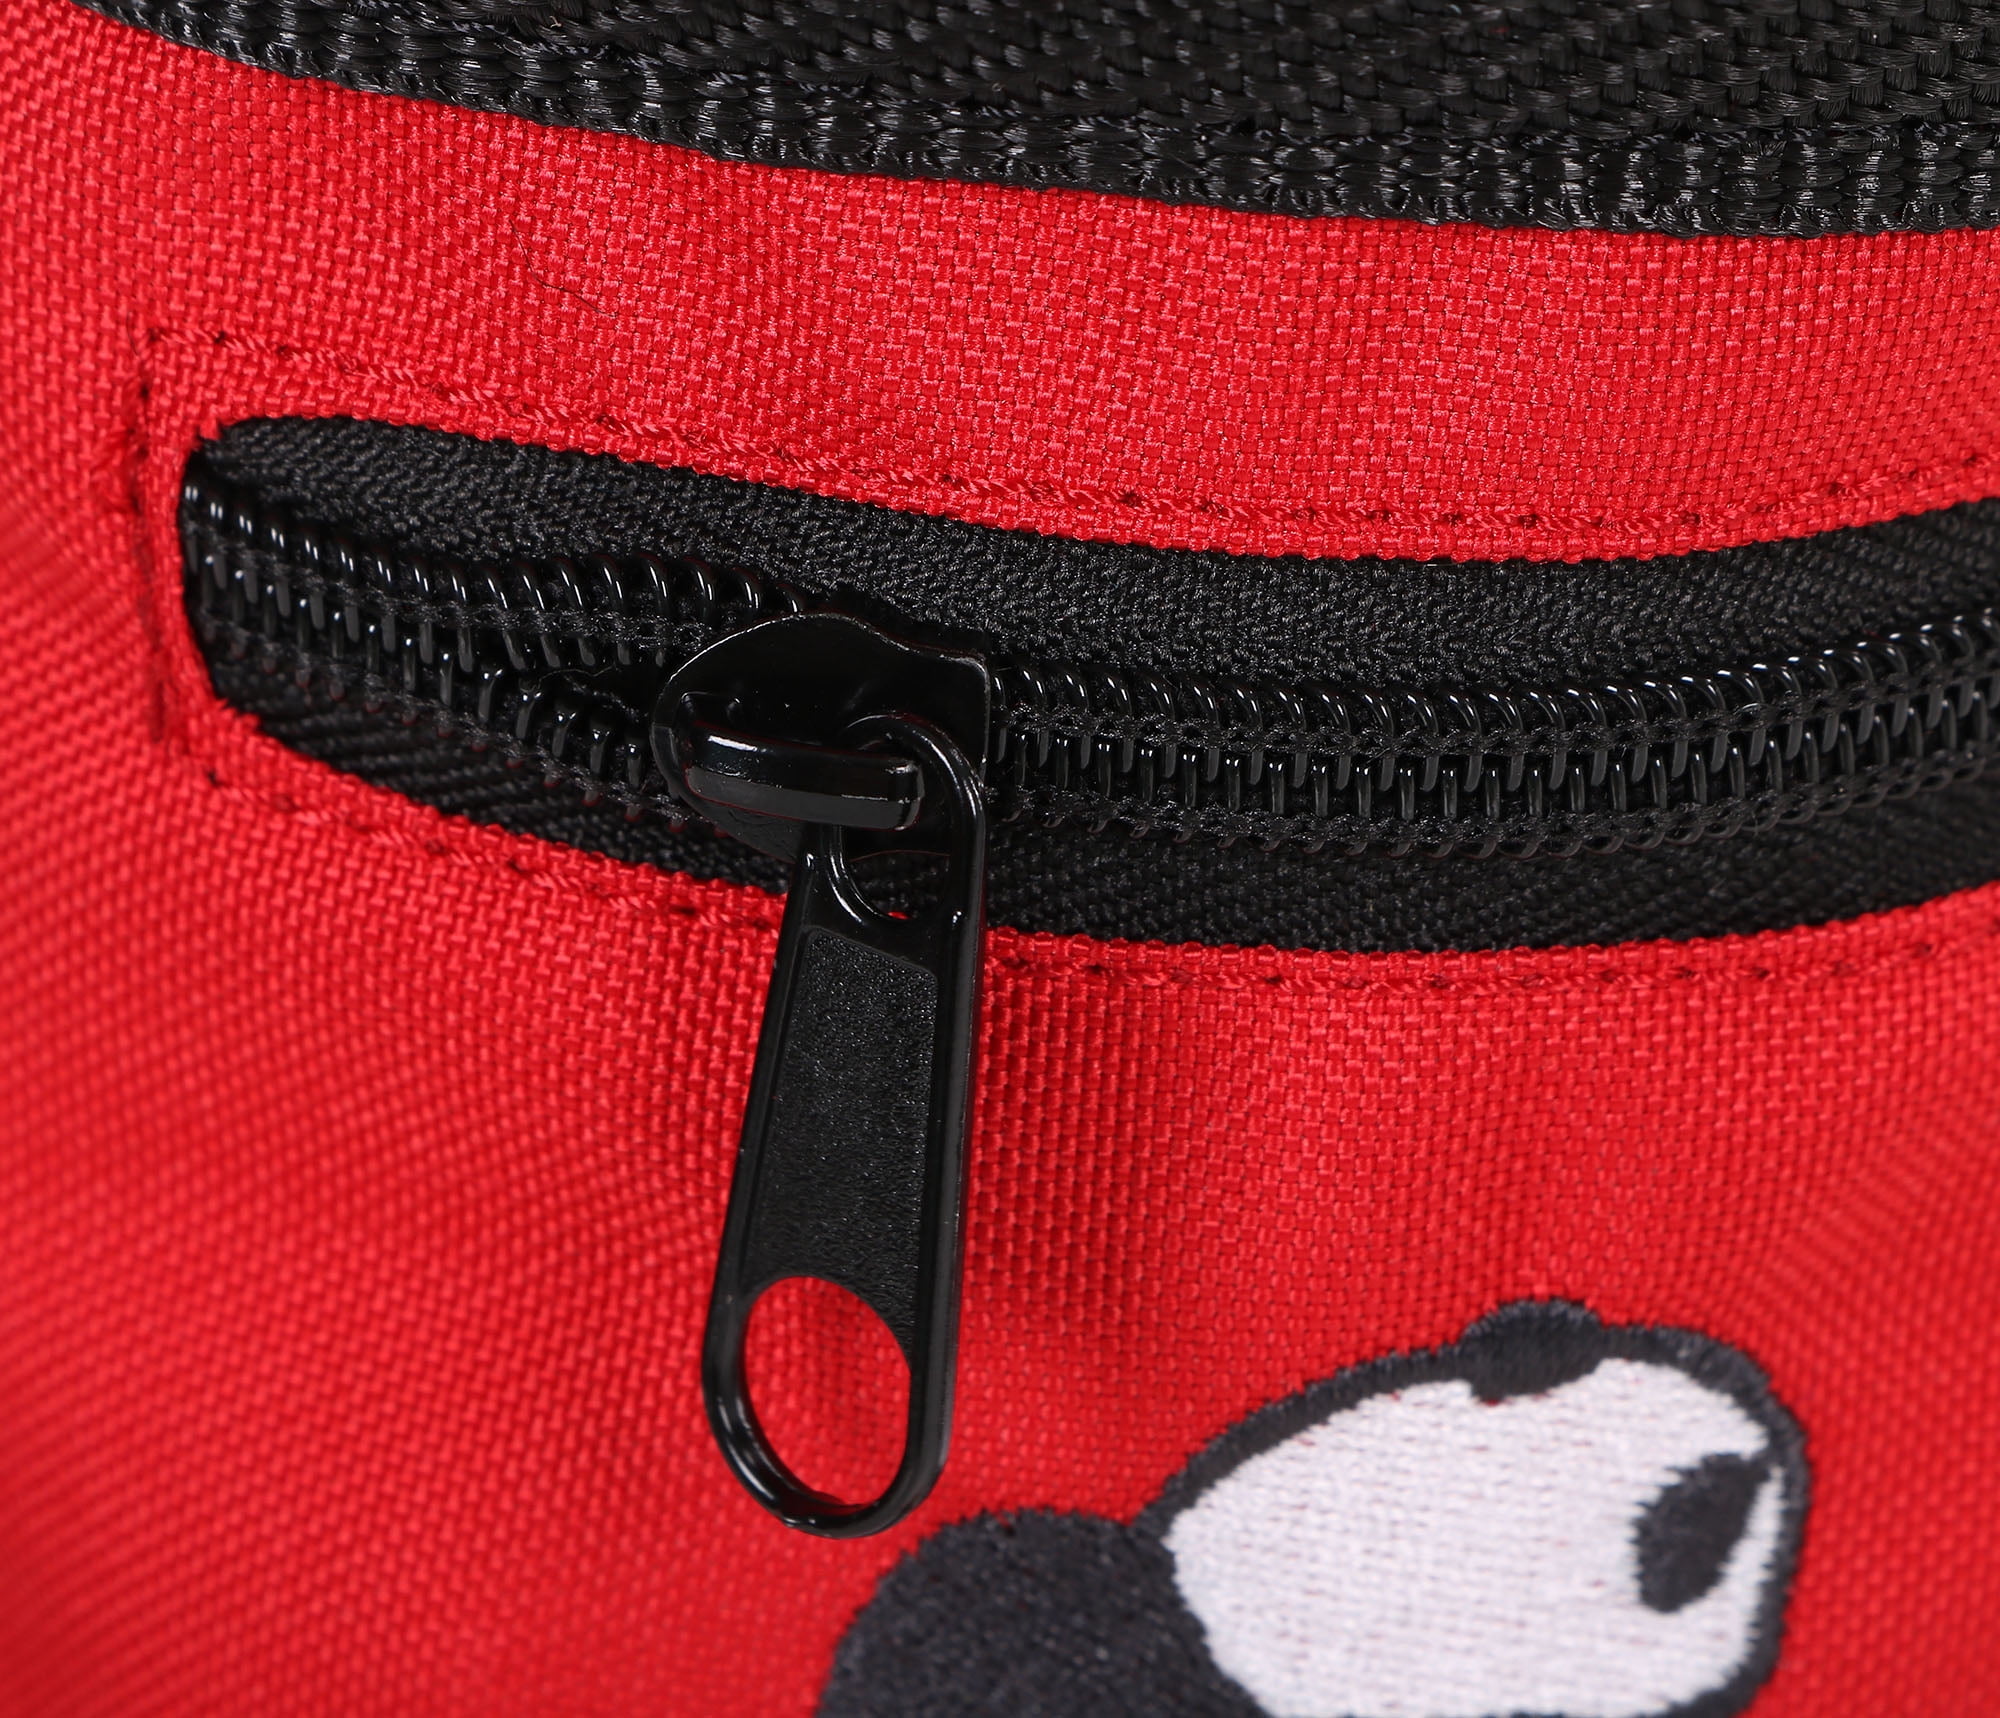 AMC Rock Climbing Panda Embroidered Chalk Bag w/Zip Pocket